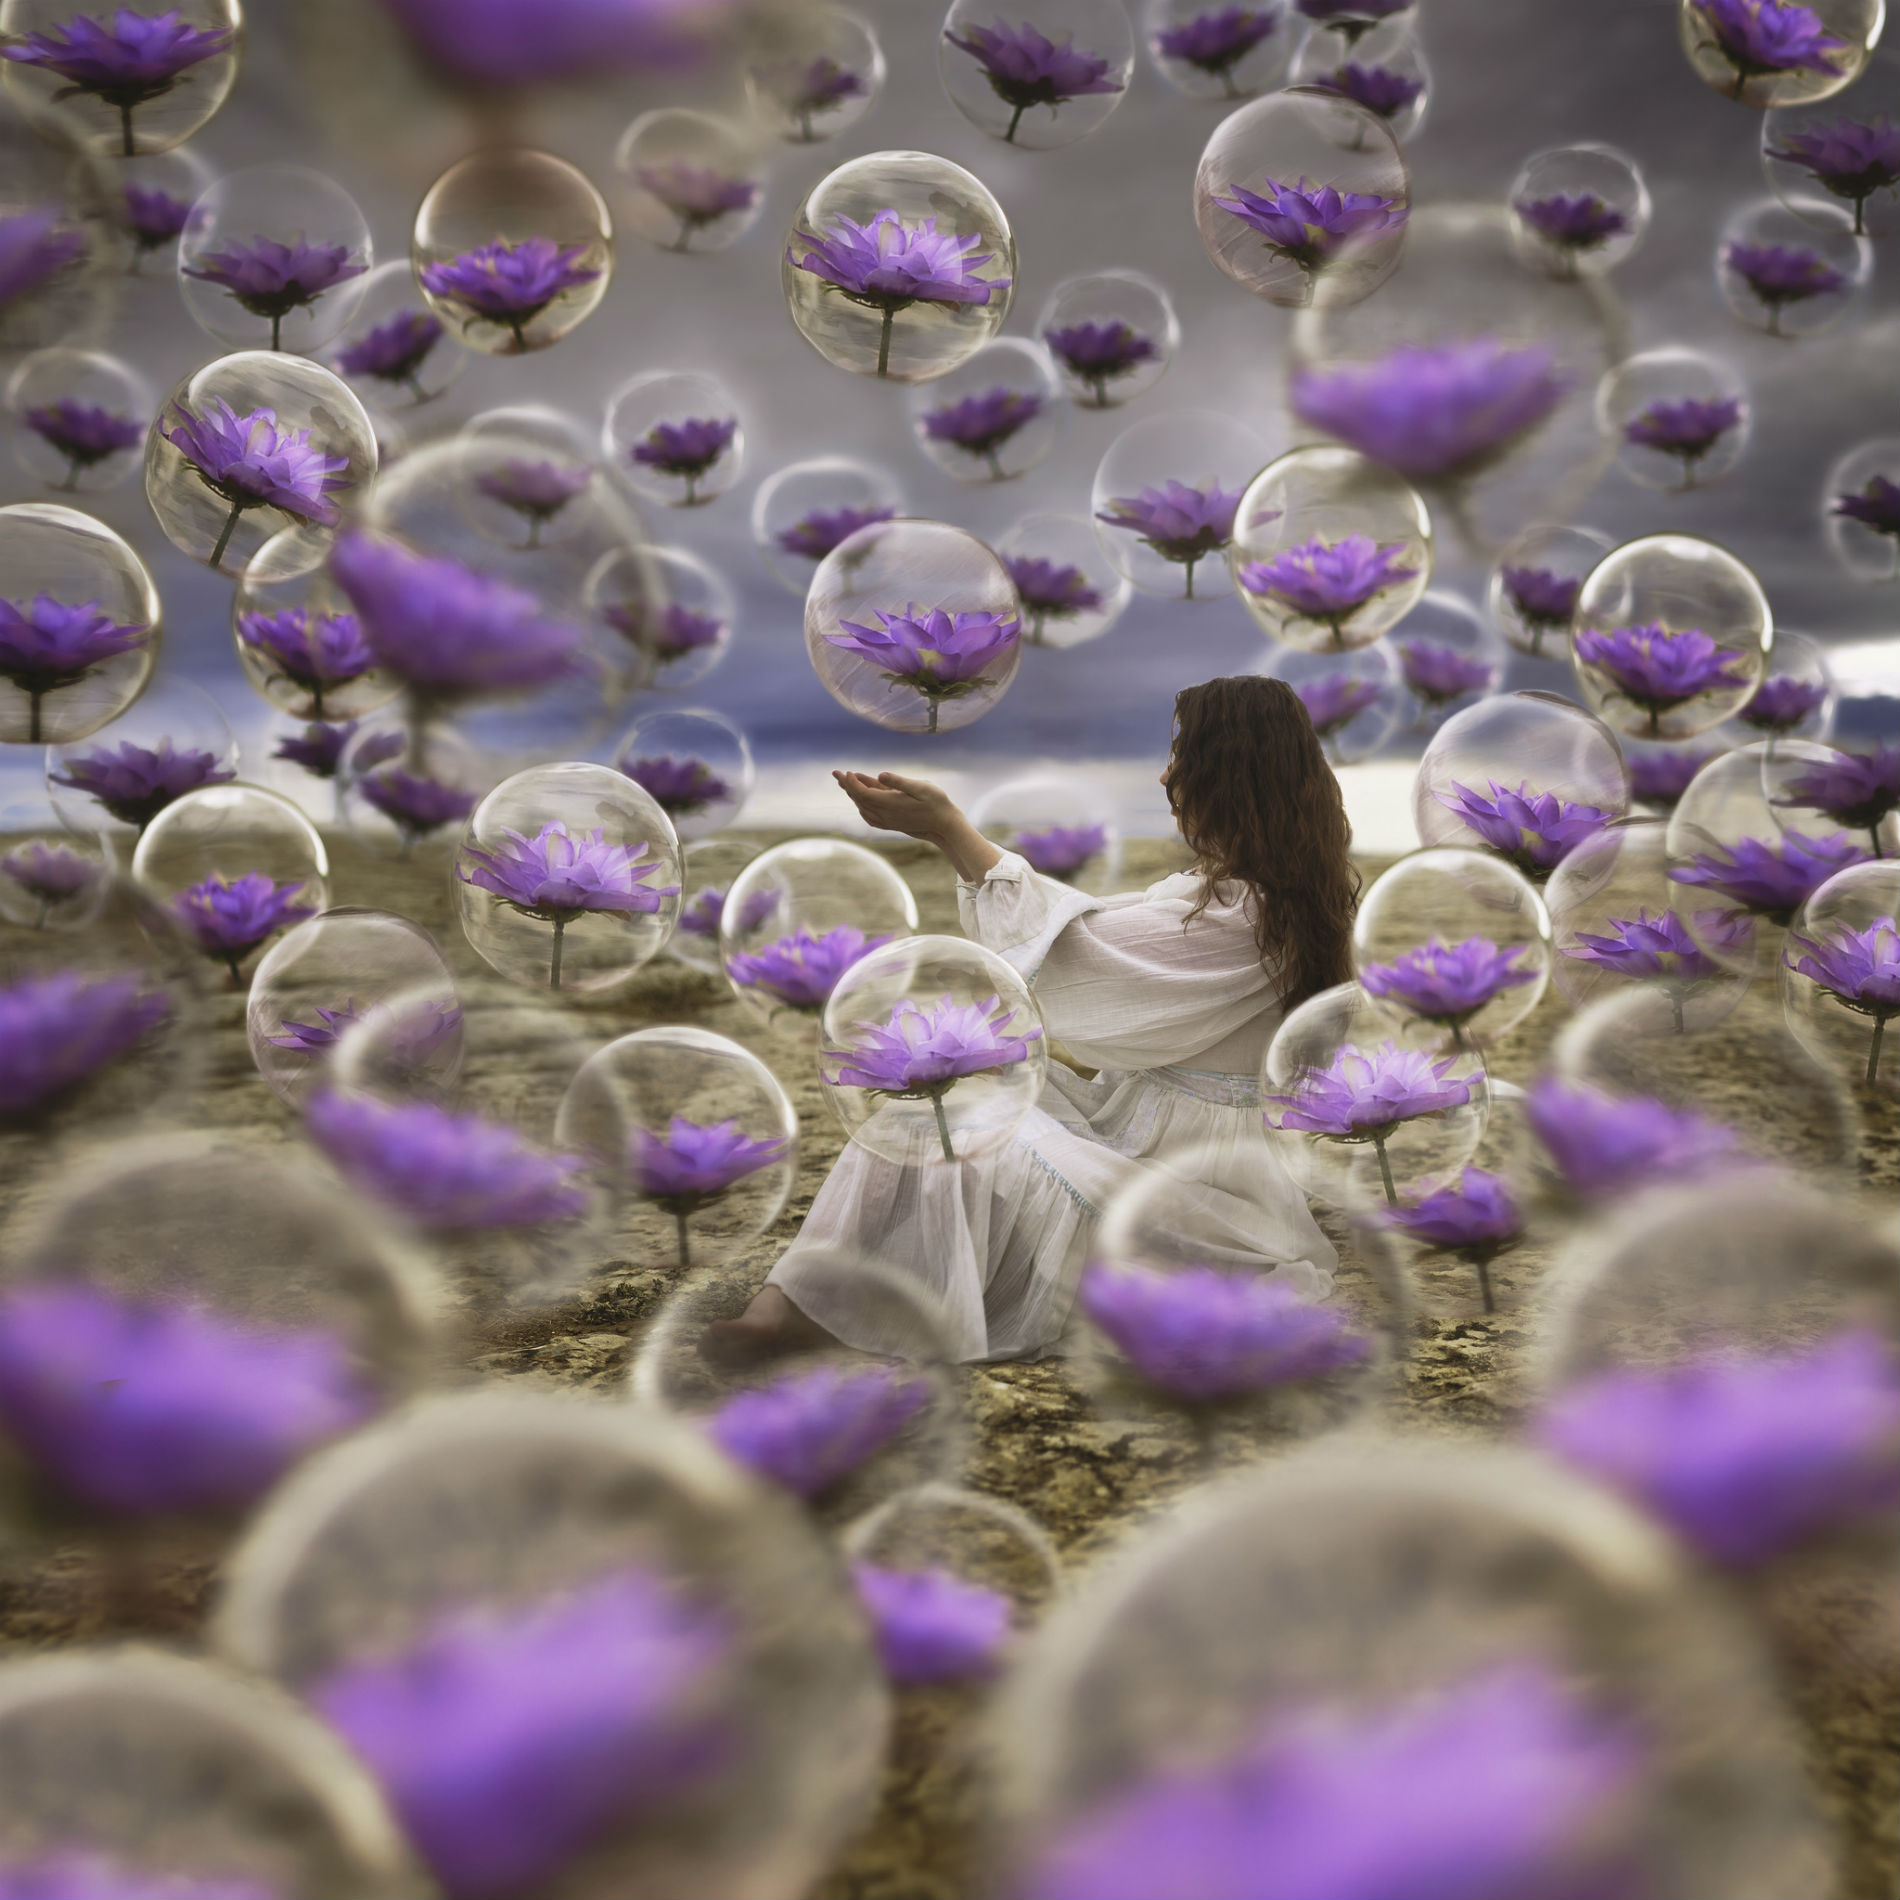 jenna martin photography surreal purple flowers